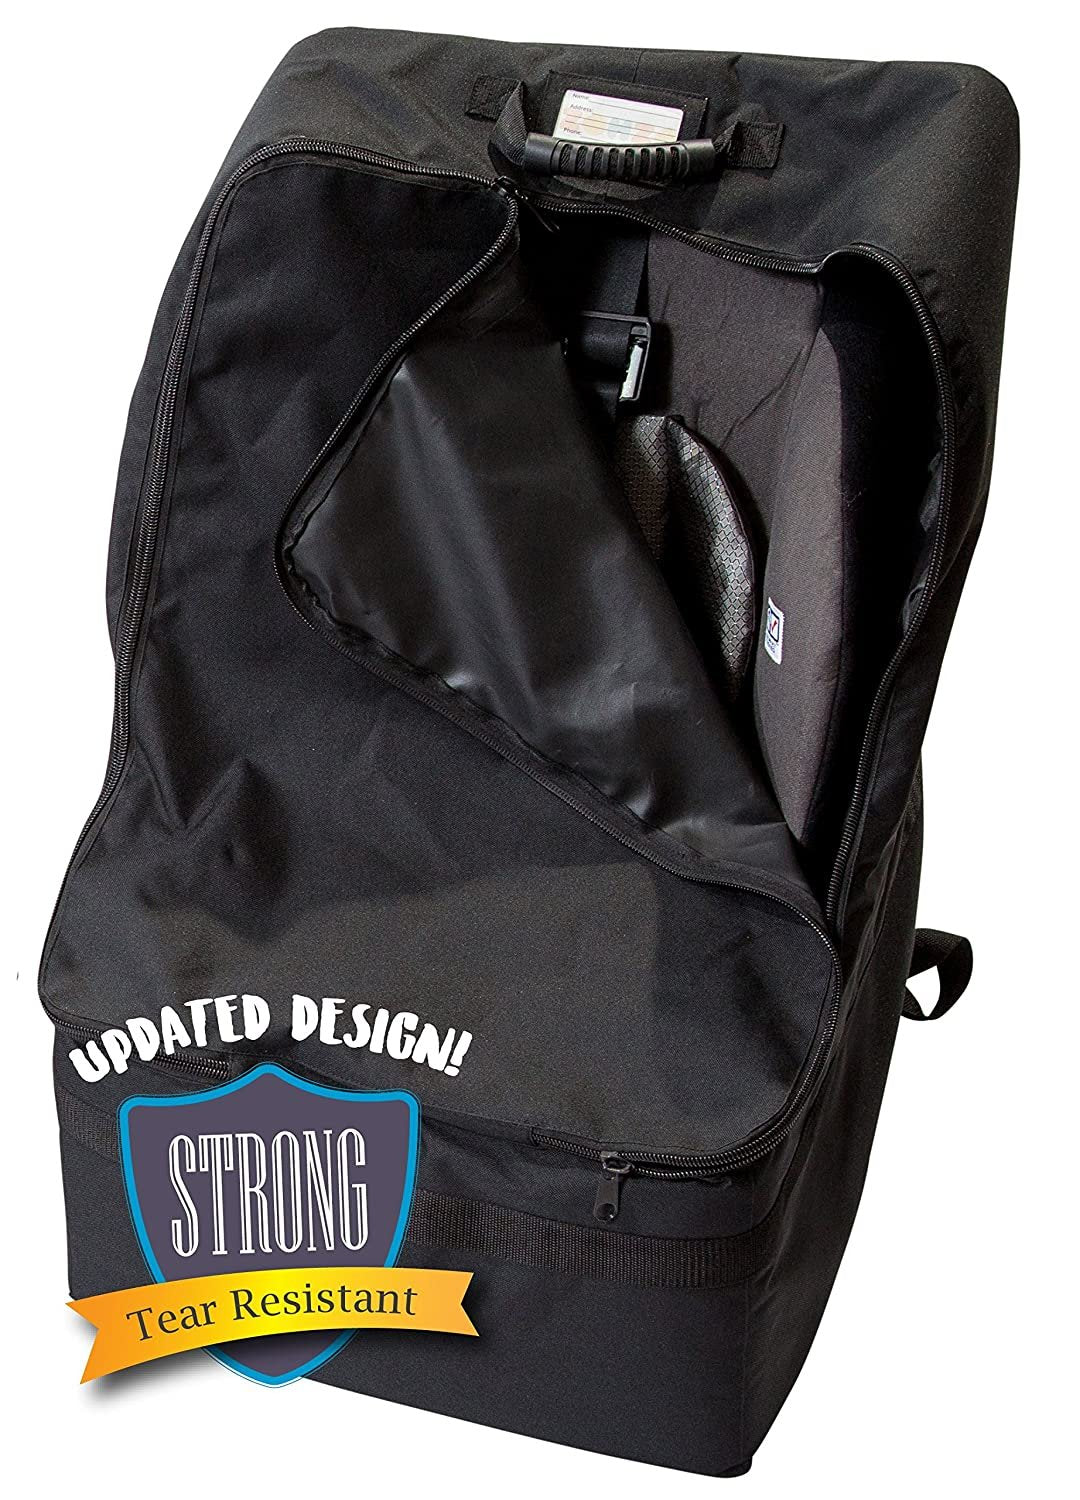 Zohzo Car Seat Travel Bag - Adjustable Backpack, Black, Size 1 - Free Shipping & Returns